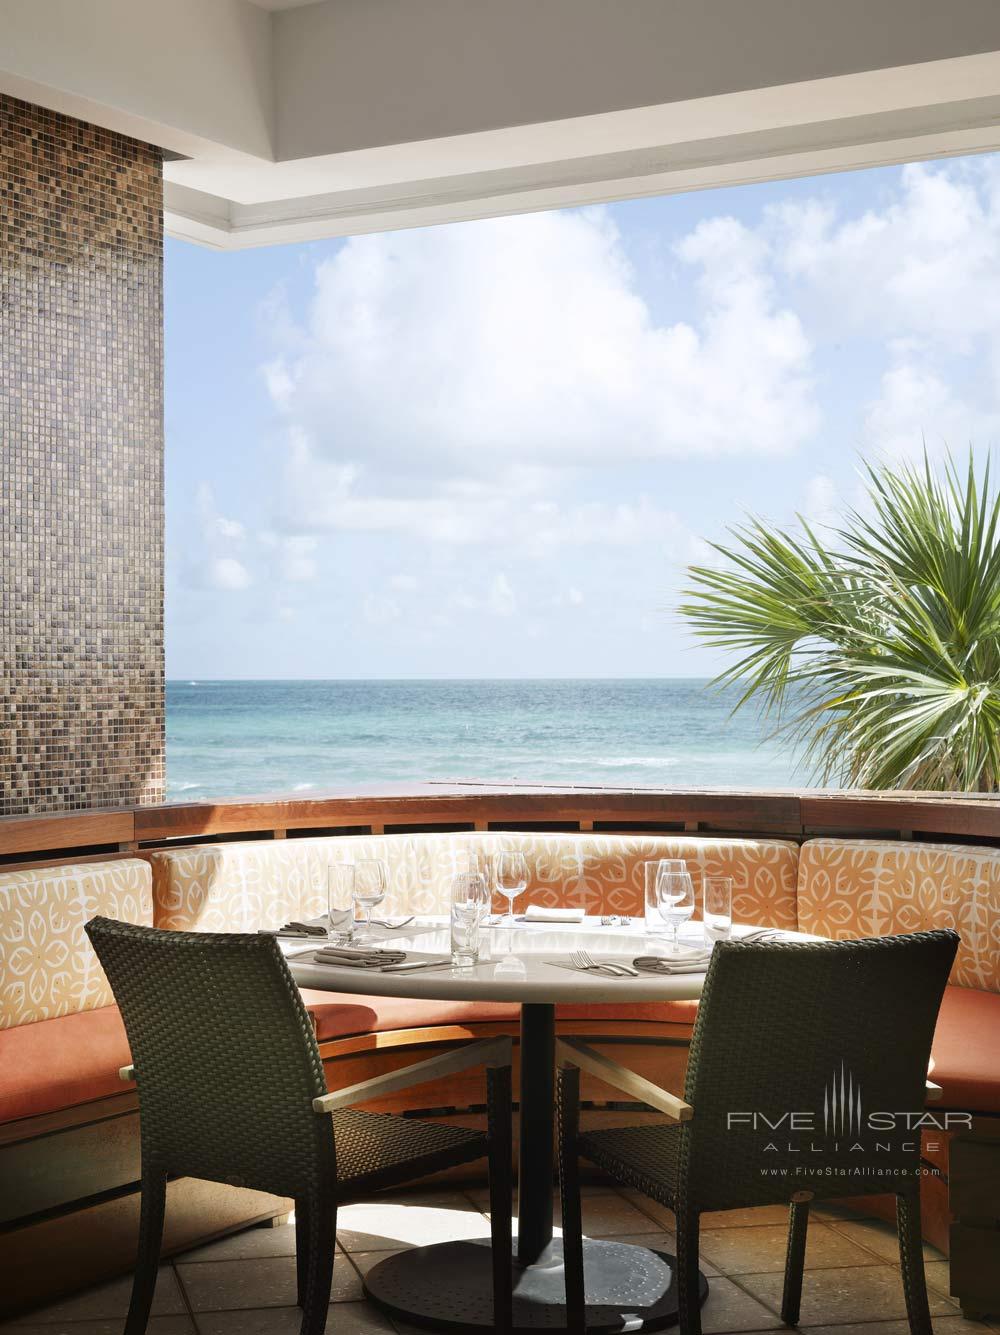 Outdoor Dining at Carillon Hotel Miami Beach, FL